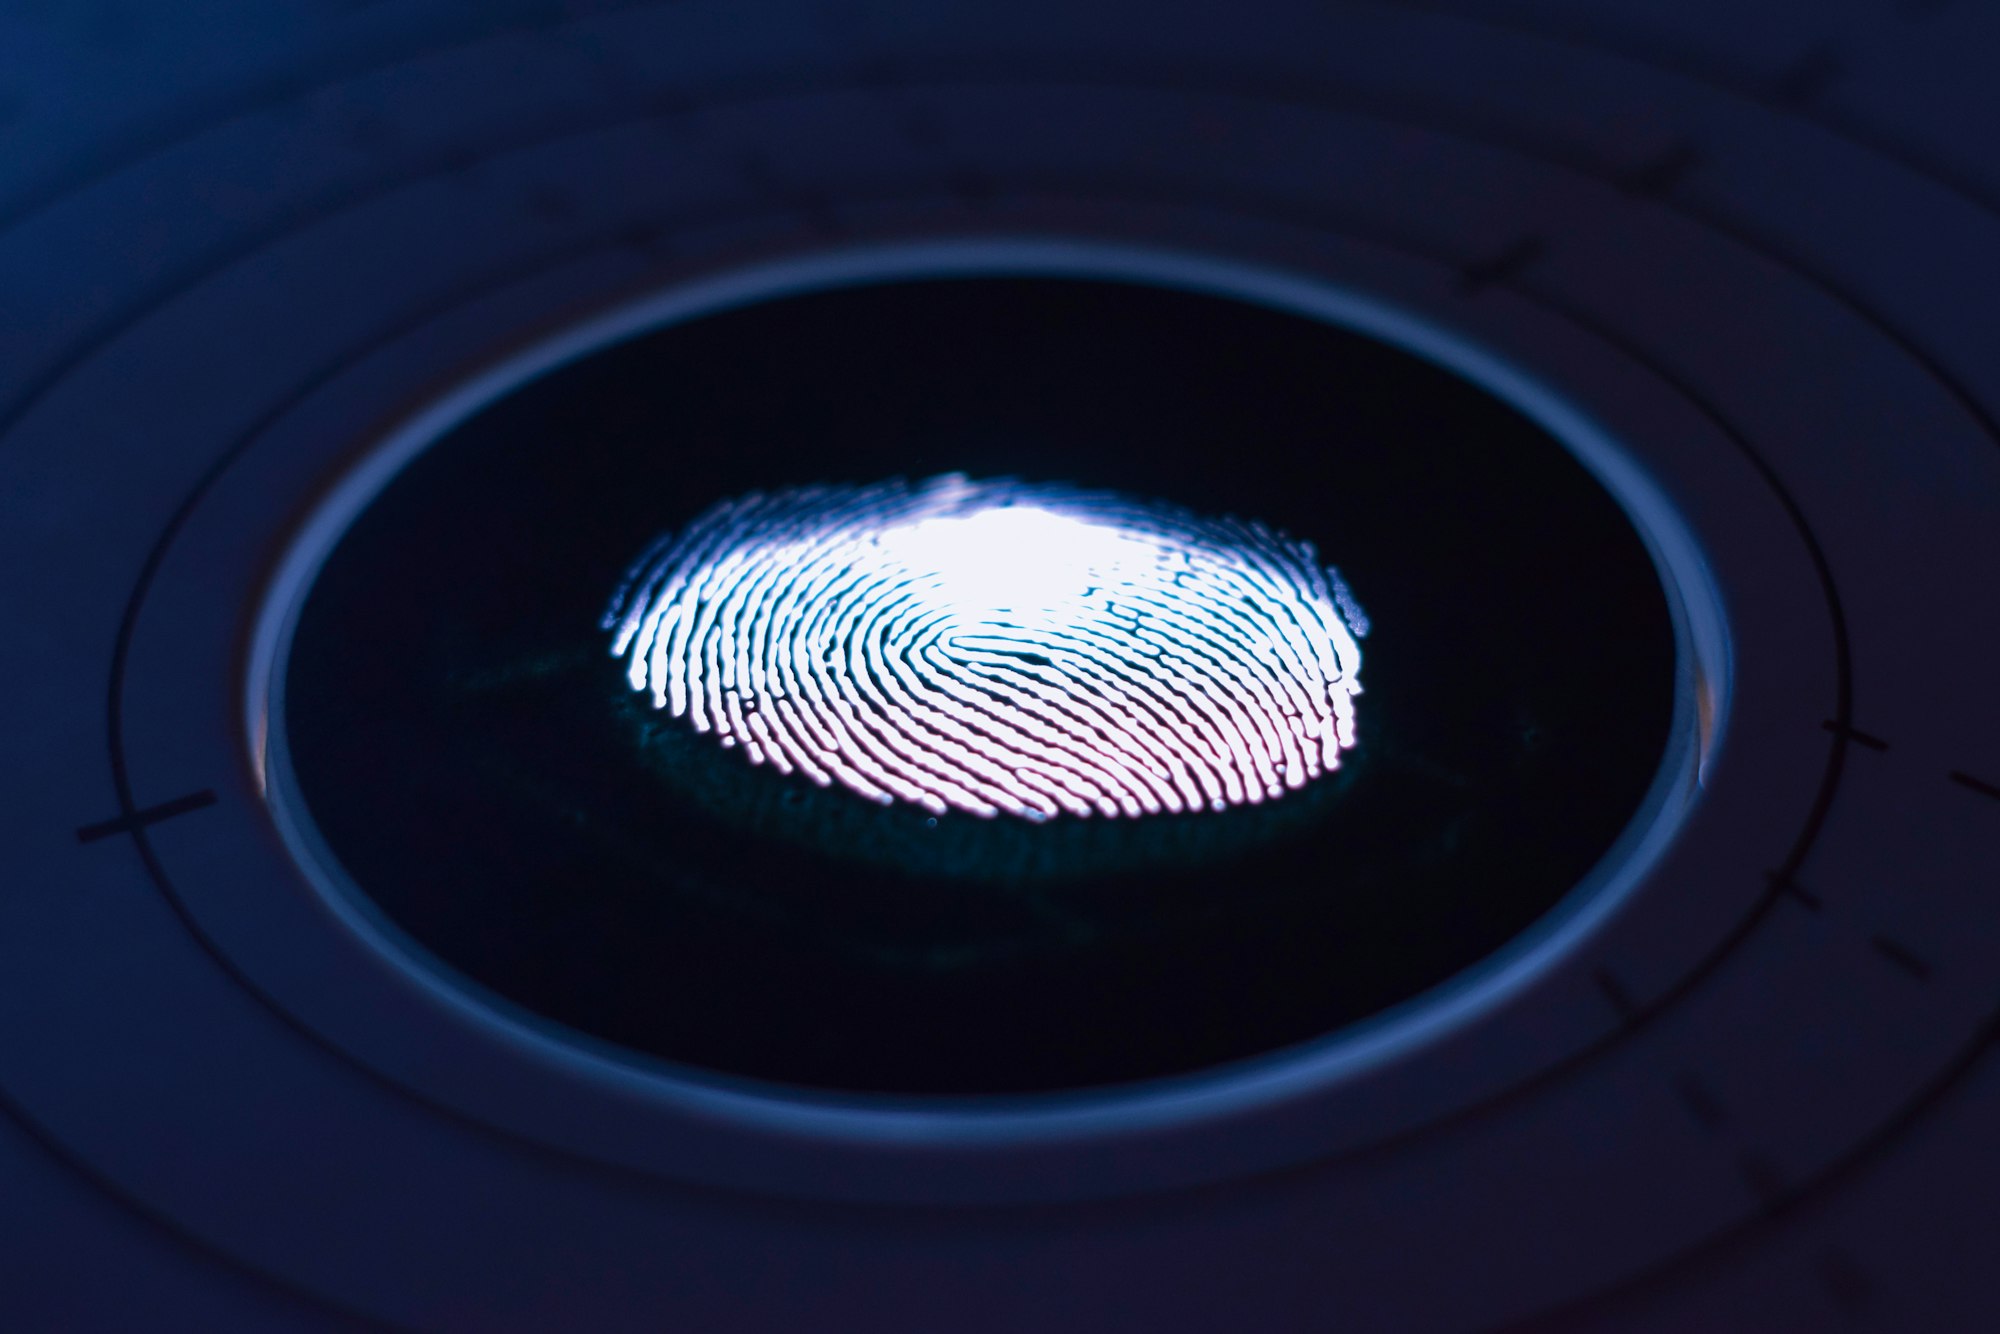 A fingerprint scanner